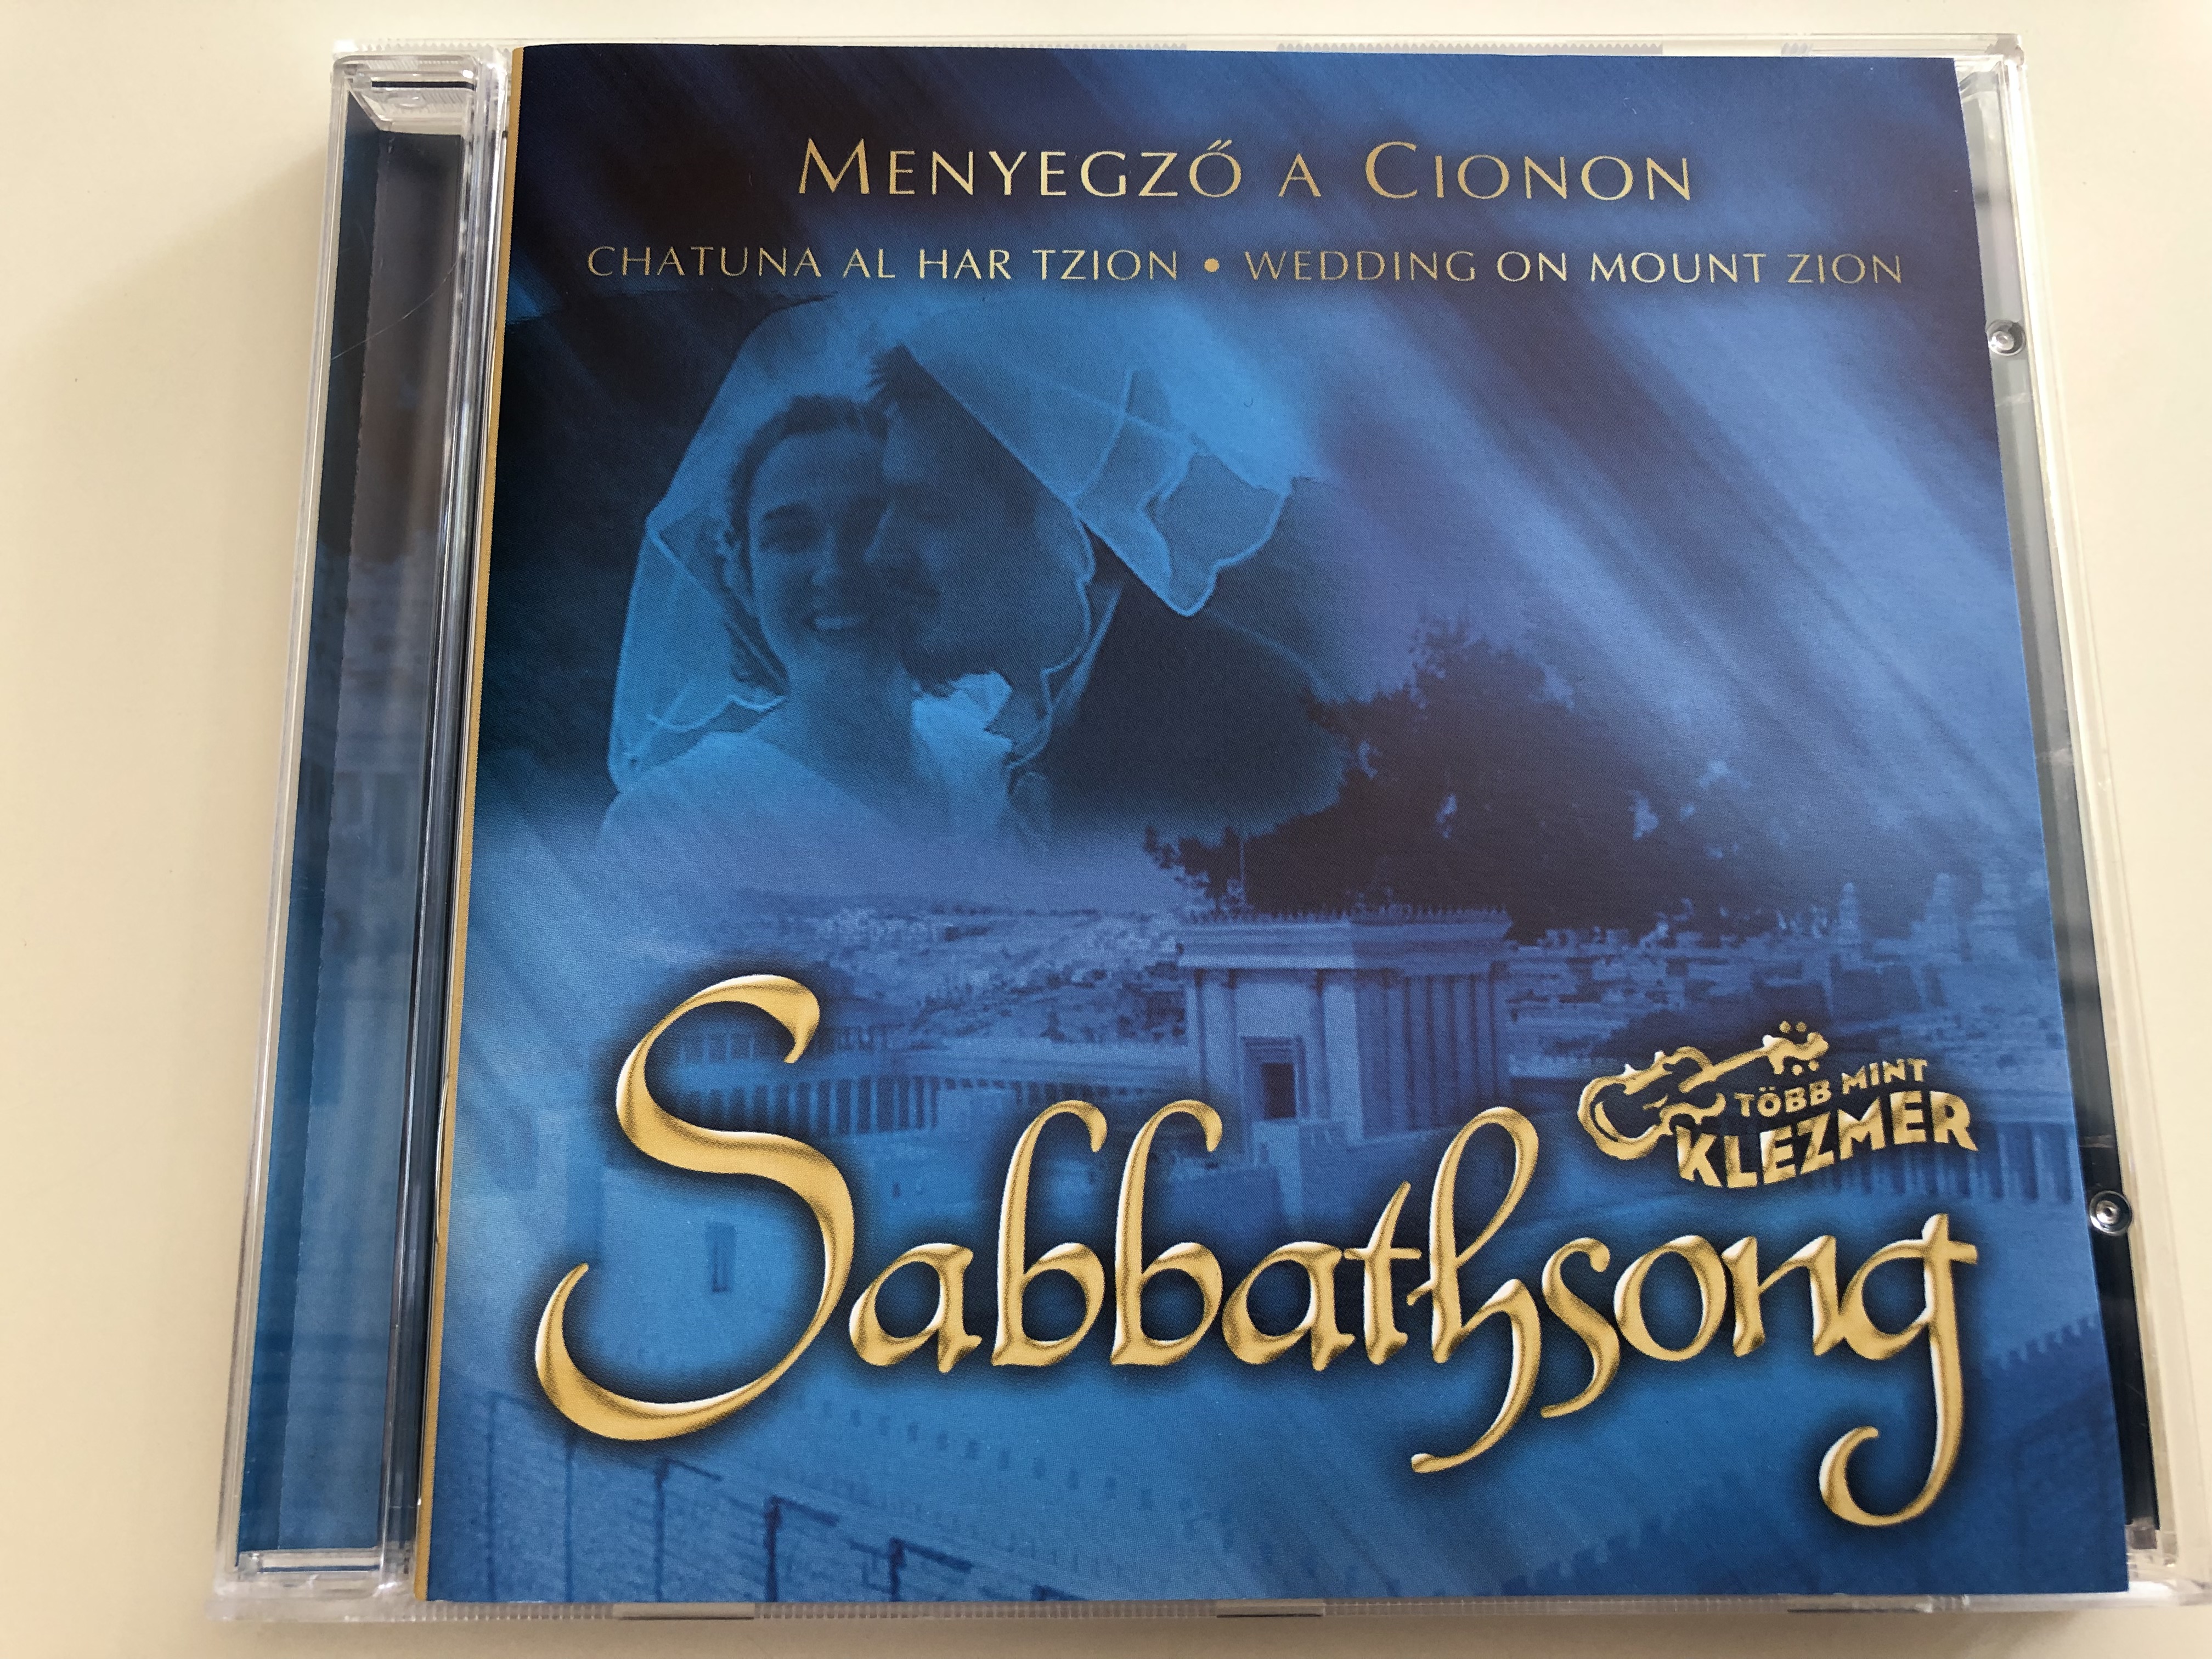 sabbathsong-menyegz-a-cionon-chatuan-al-har-tzion-wedding-on-mount-zion-t-bb-mint-klezmer-audio-cd-1-.jpg